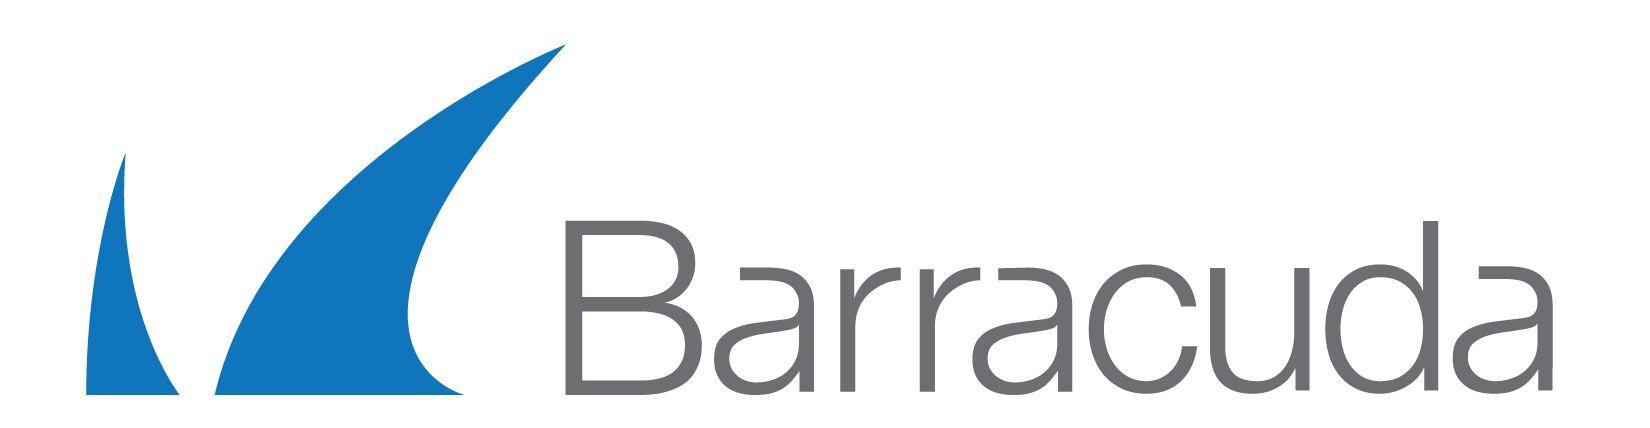 Barracuda Networks Logo - Barracuda Networks Inc. (NYSE:CUDA) a Big Buy after Earnings